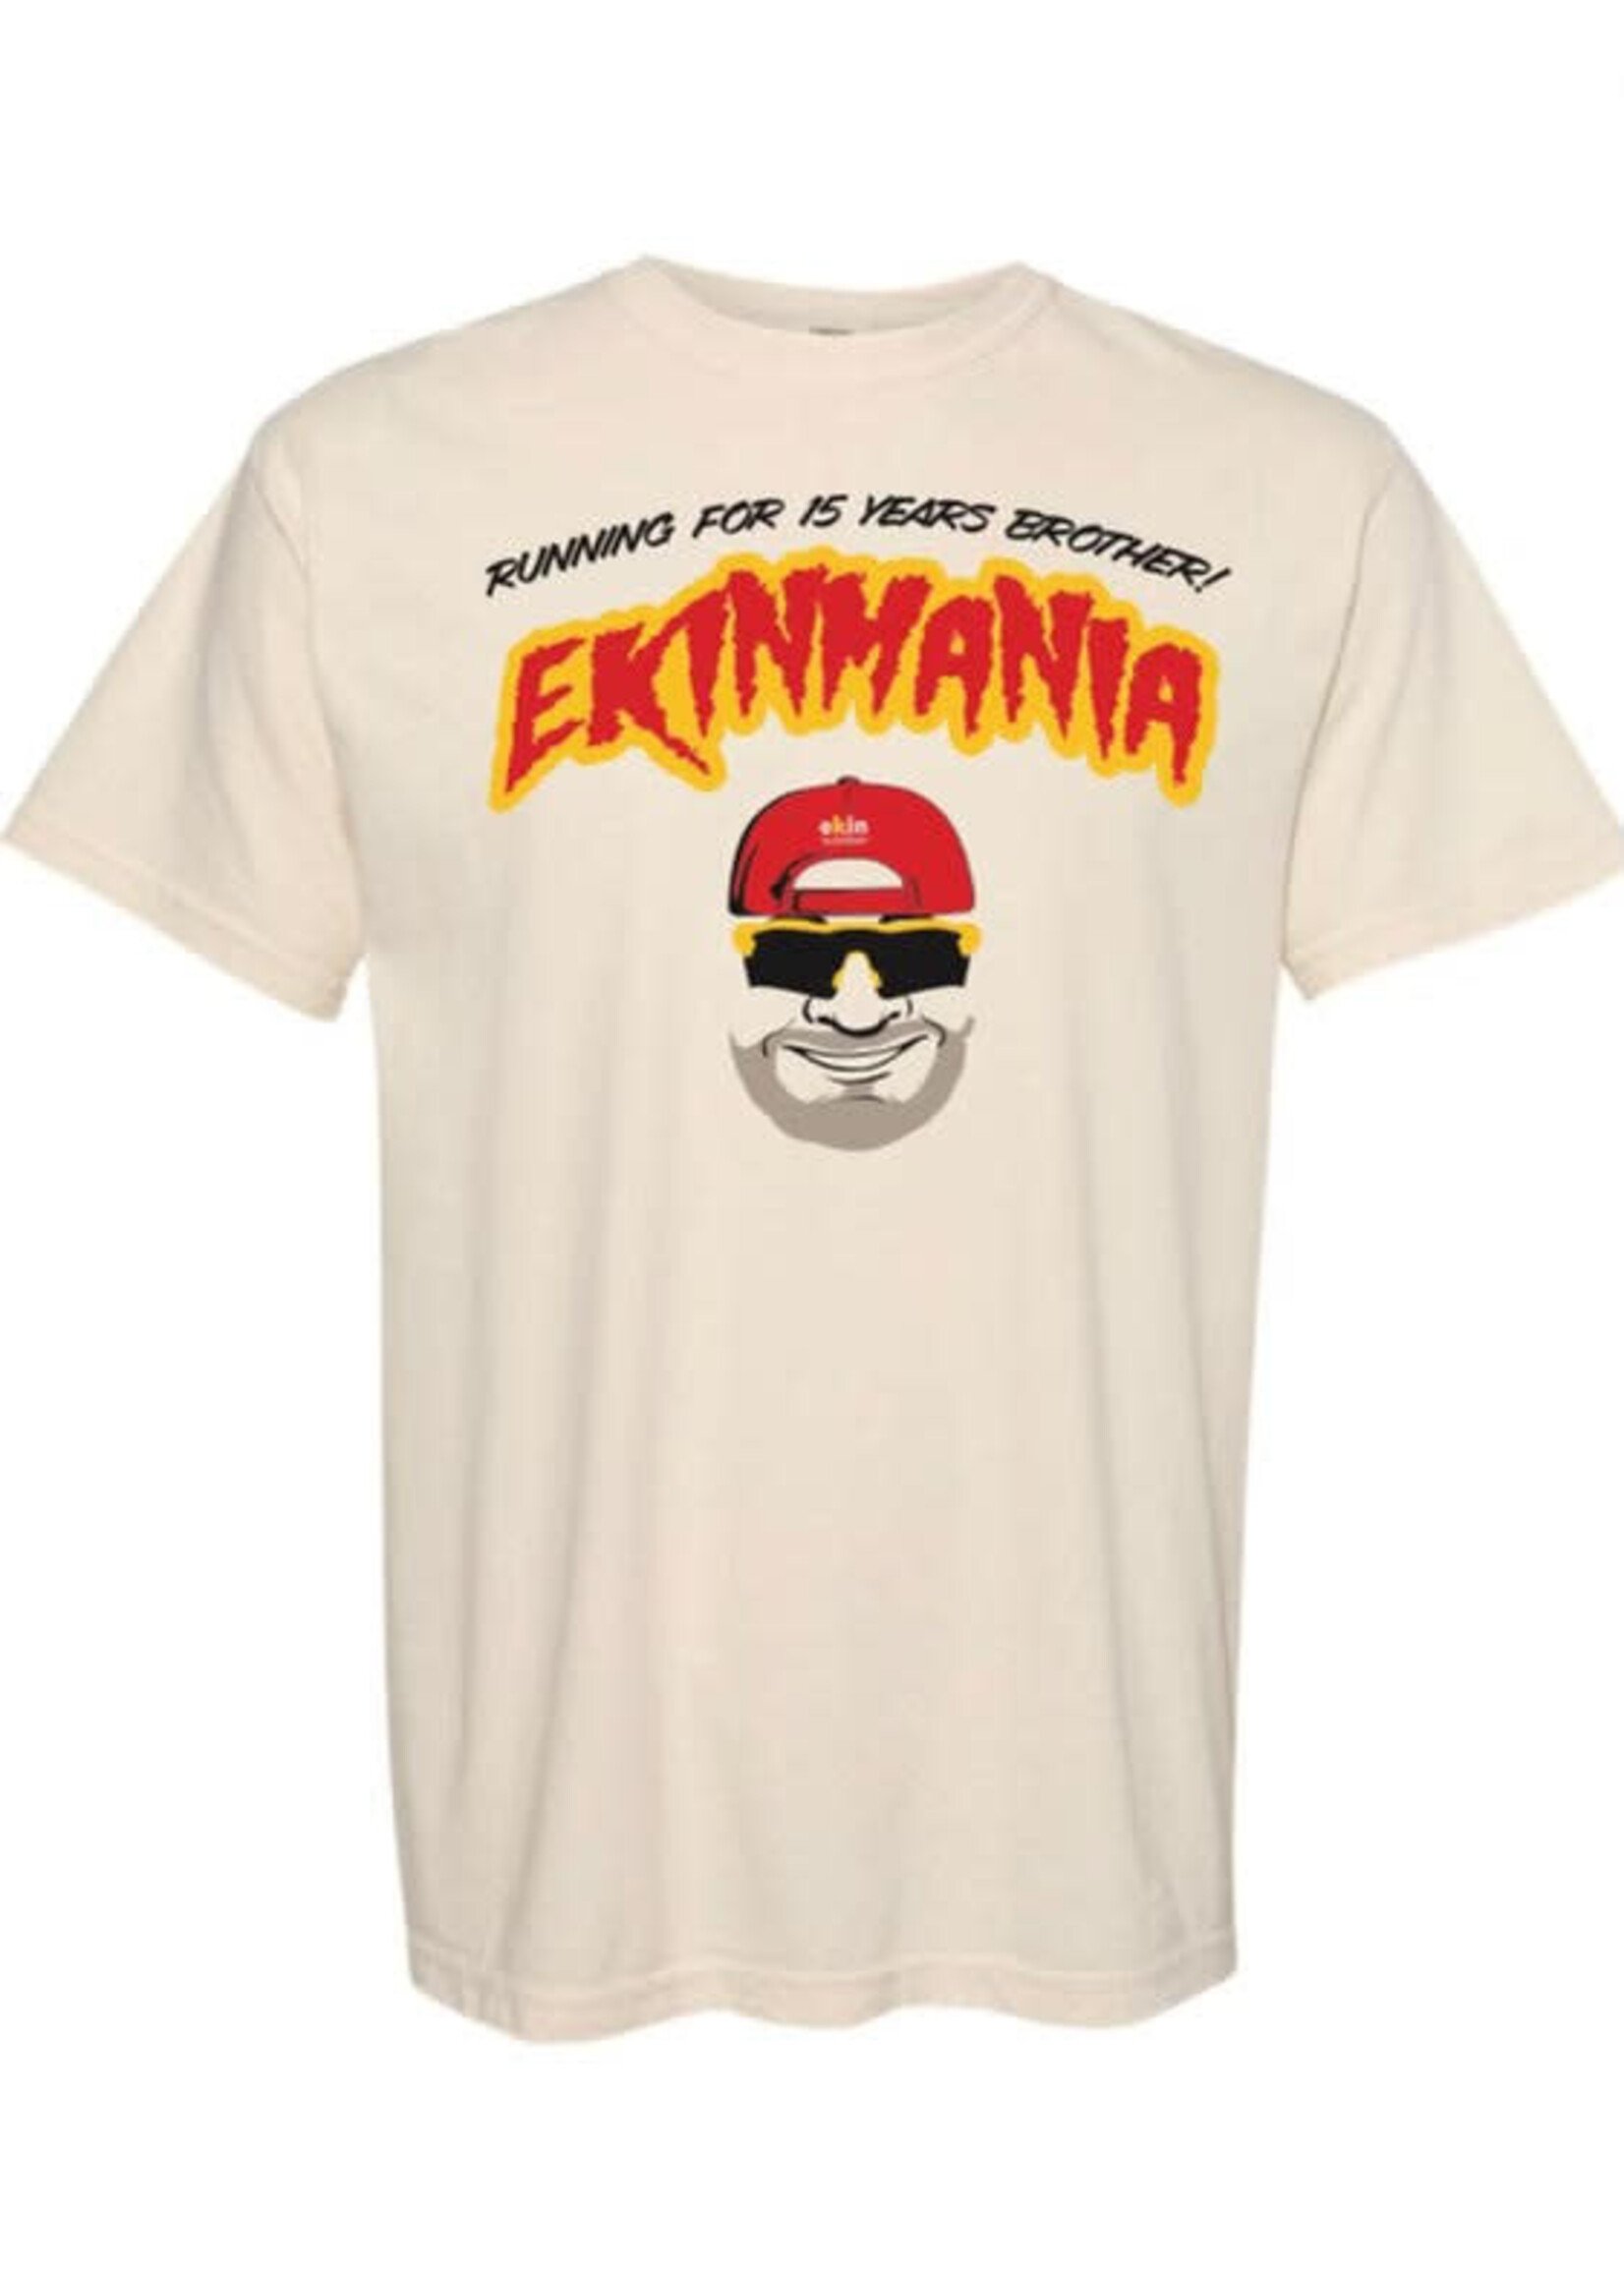 Ekinmania Shirt XL